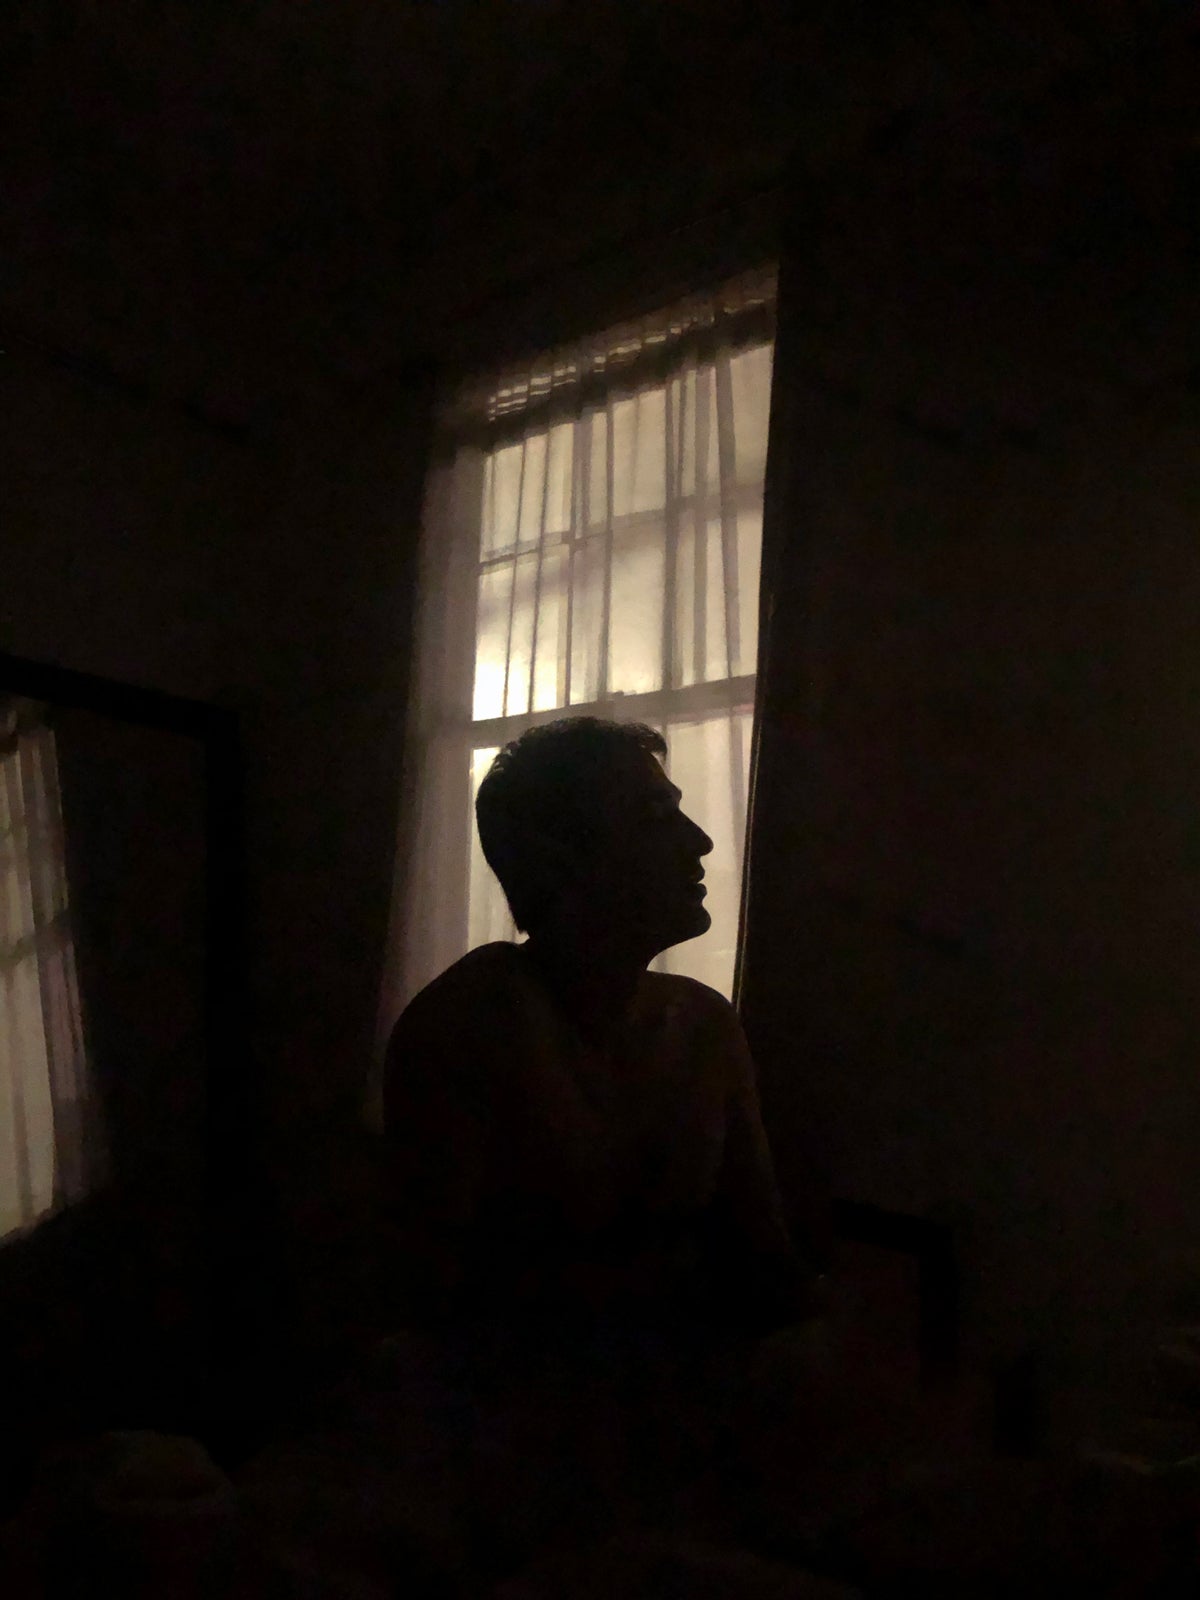 Portrait of man's dimly lit silhouette in front of window